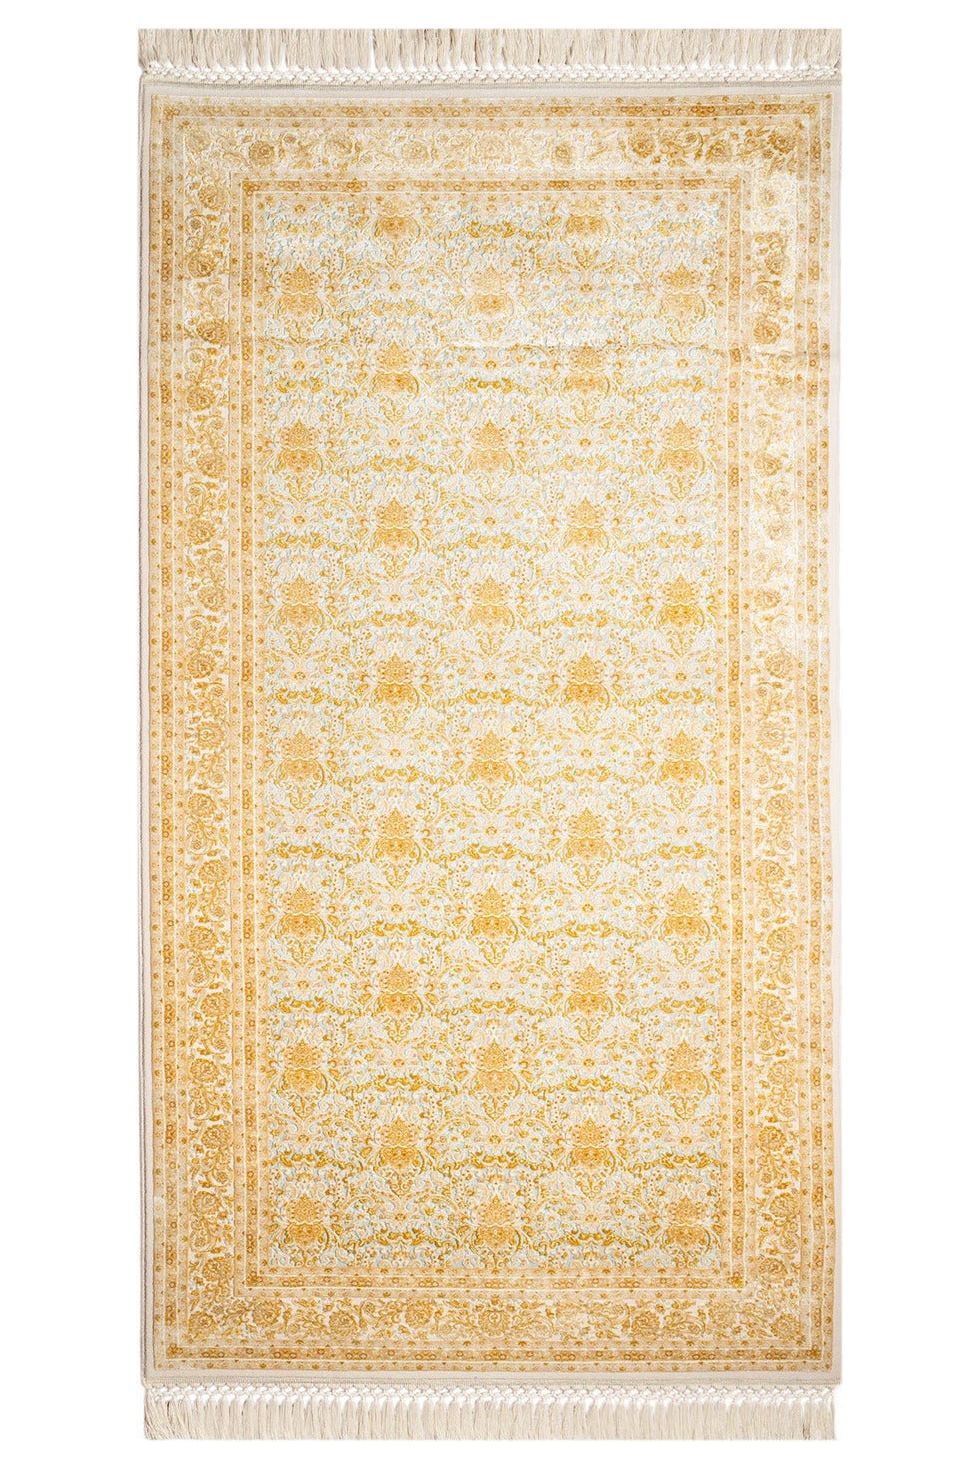 #Turkish_Carpets_Rugs# #Modern_Carpets# #Abrash_Carpets#Abrash-18005284-200x100